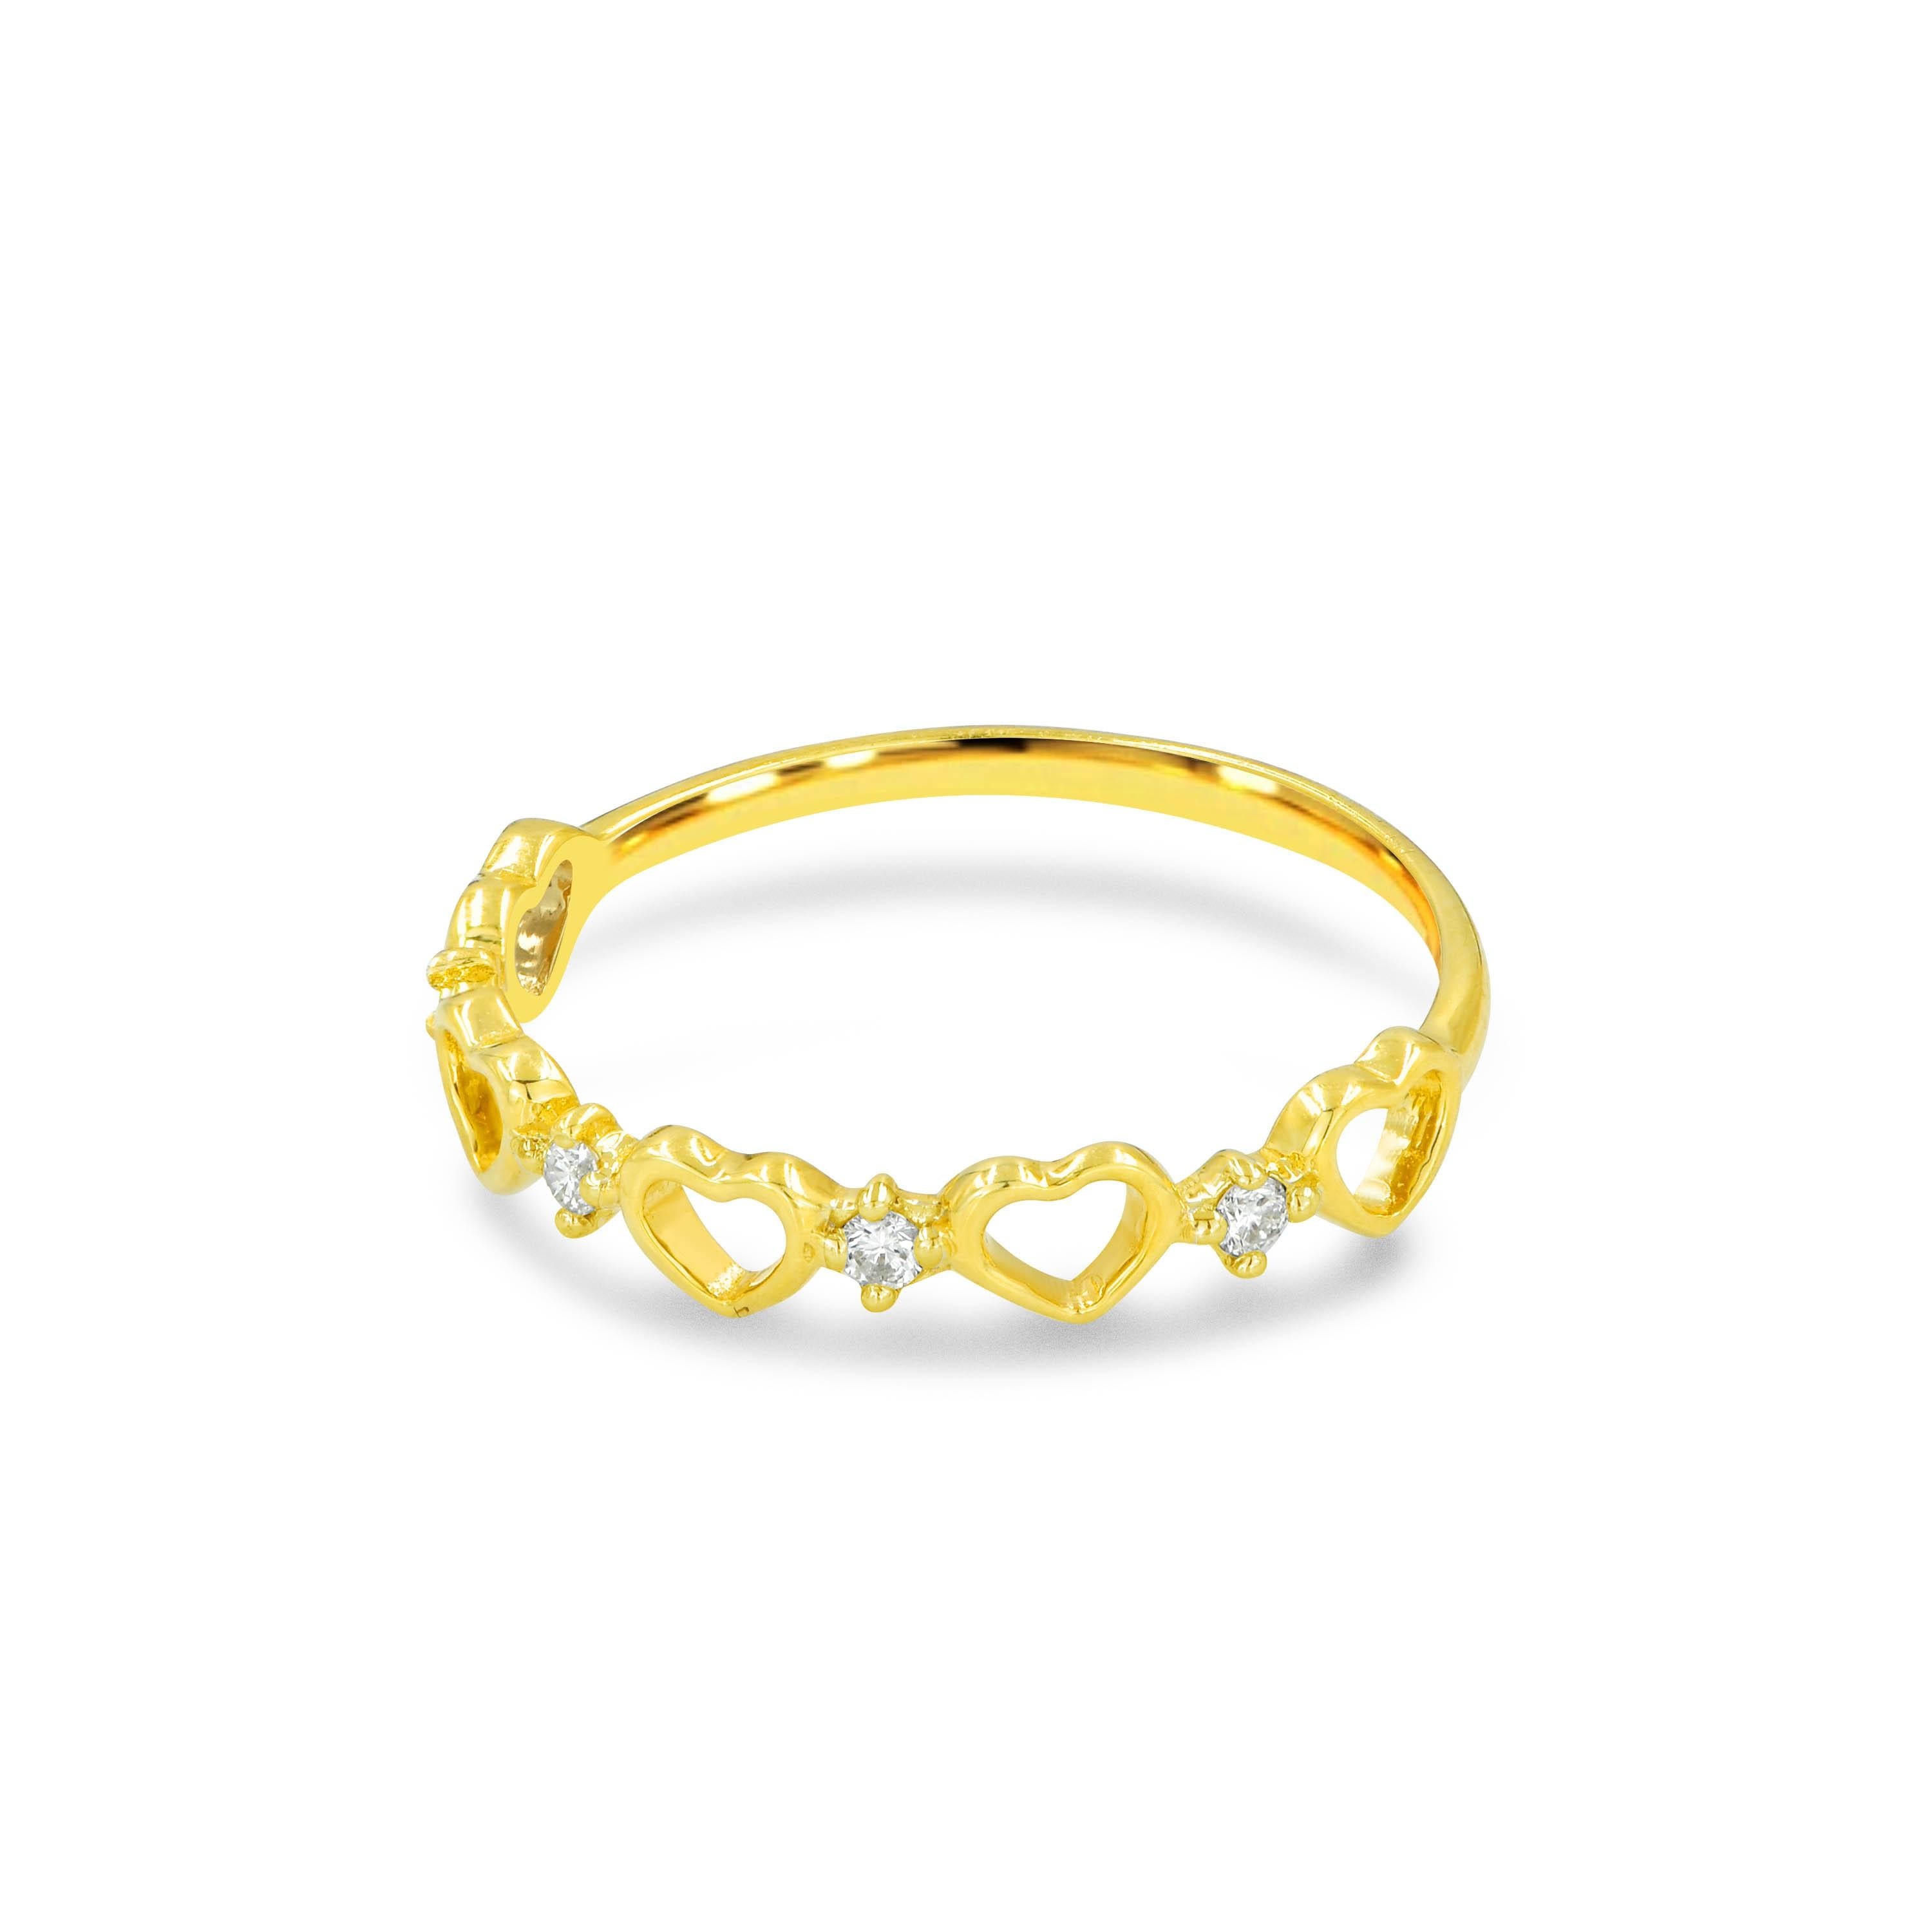 For Sale:  14k Gold 0.07 Carat Diamond Heart Ring 5